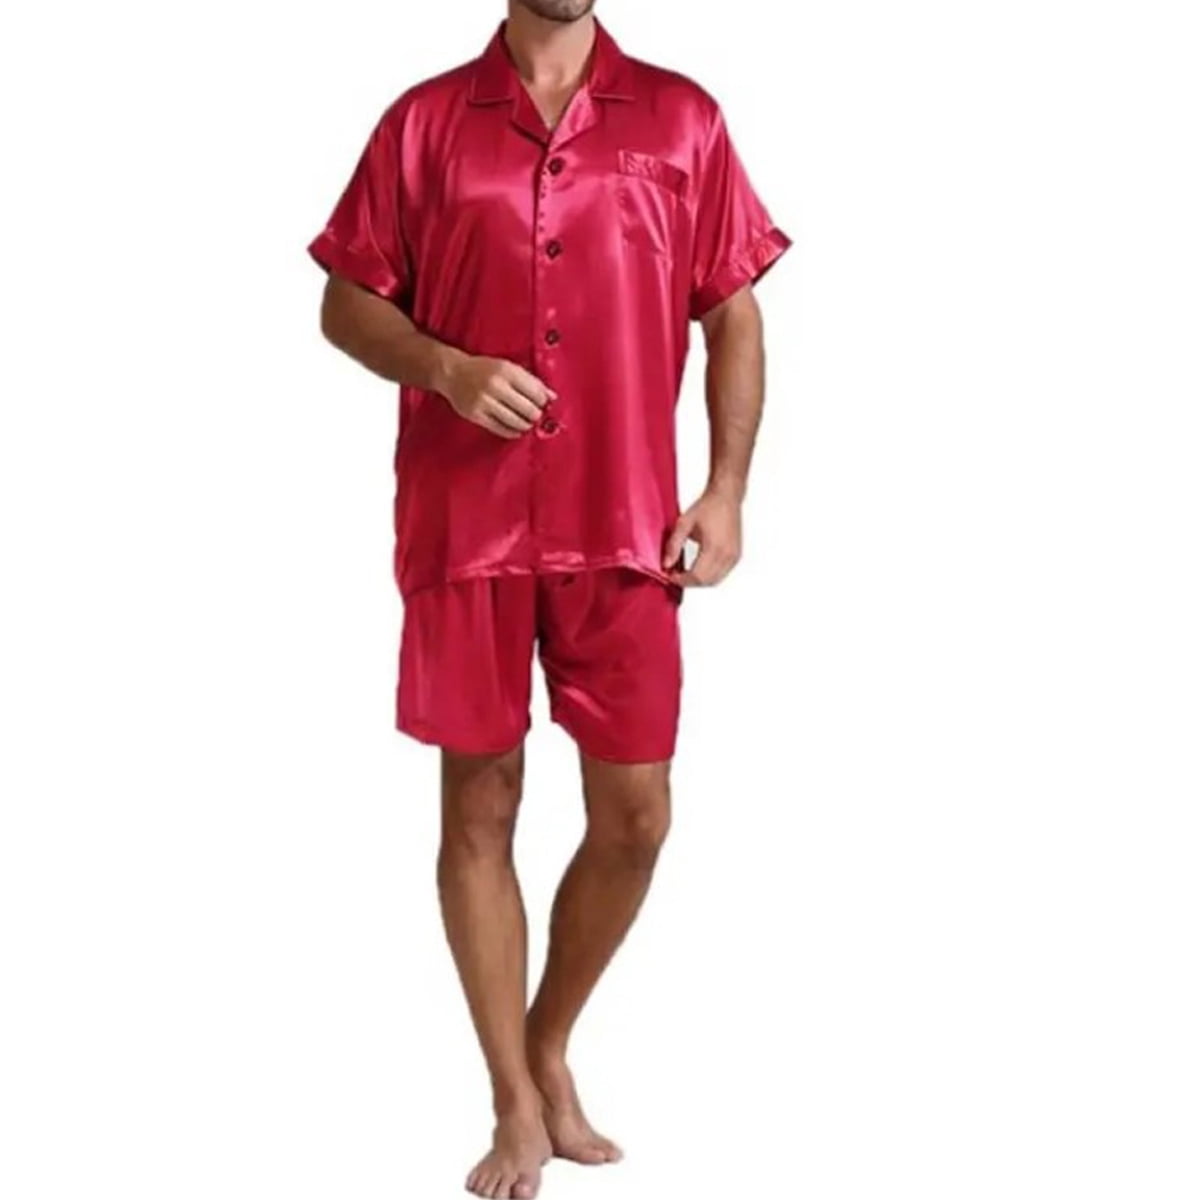 Irevial Men Pjs Satin Silk Pajama Set Short Sleeve Loungewear Nightwear Sleepwear Top & Bottoms Outfits 